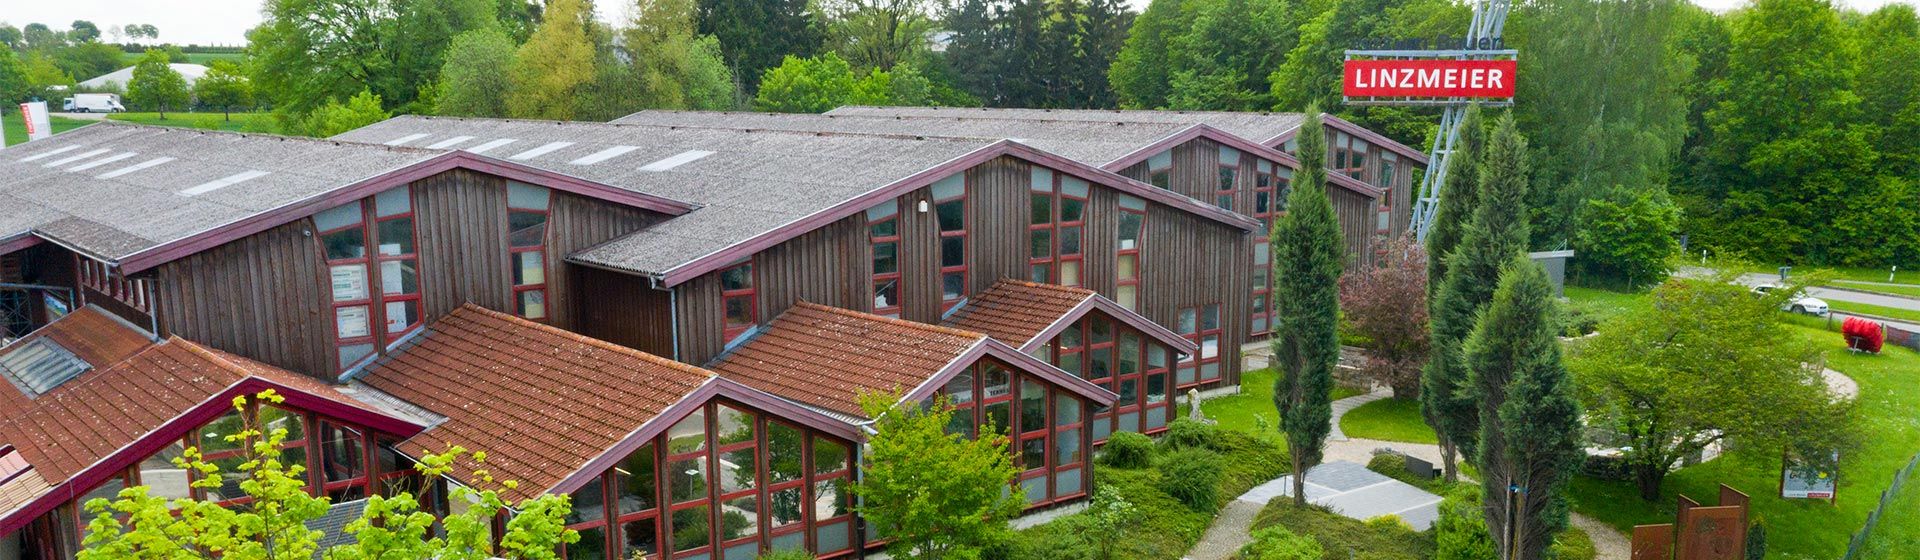 Linzmeier Baustofffe - Luftbild Riedlingen